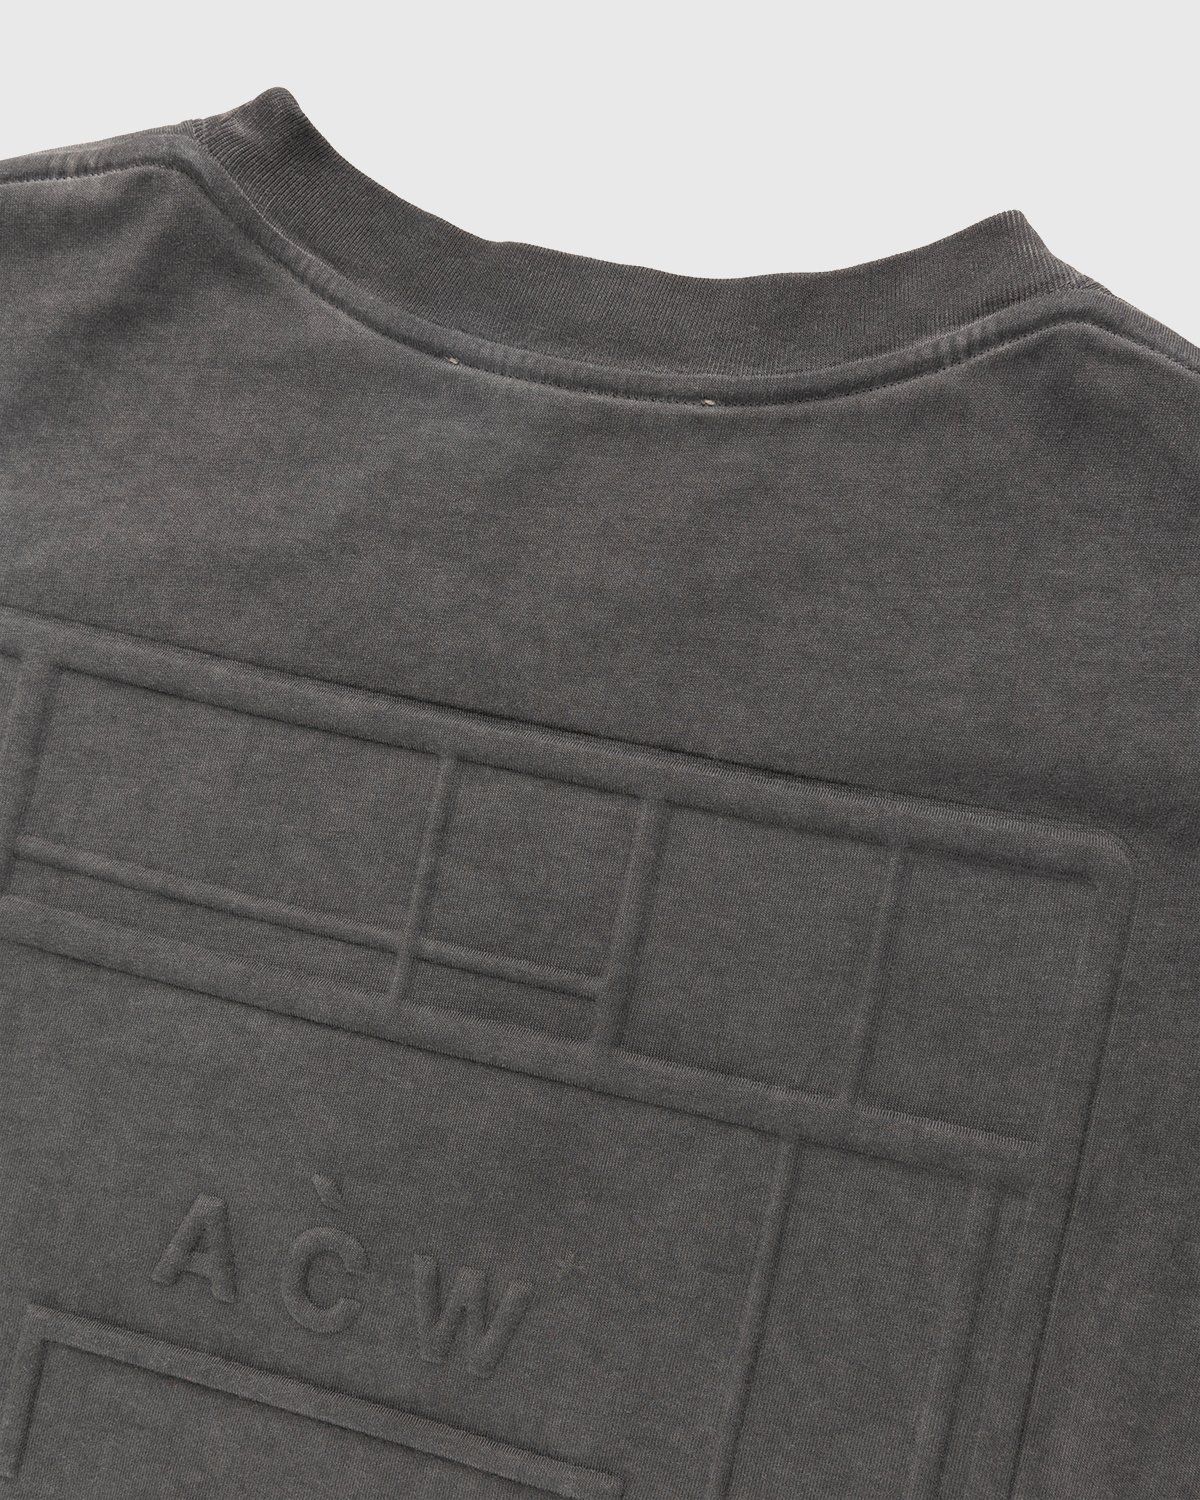 A-Cold-Wall* – Solarized Mondrian T-Shirt Black - Caps - Black - Image 3